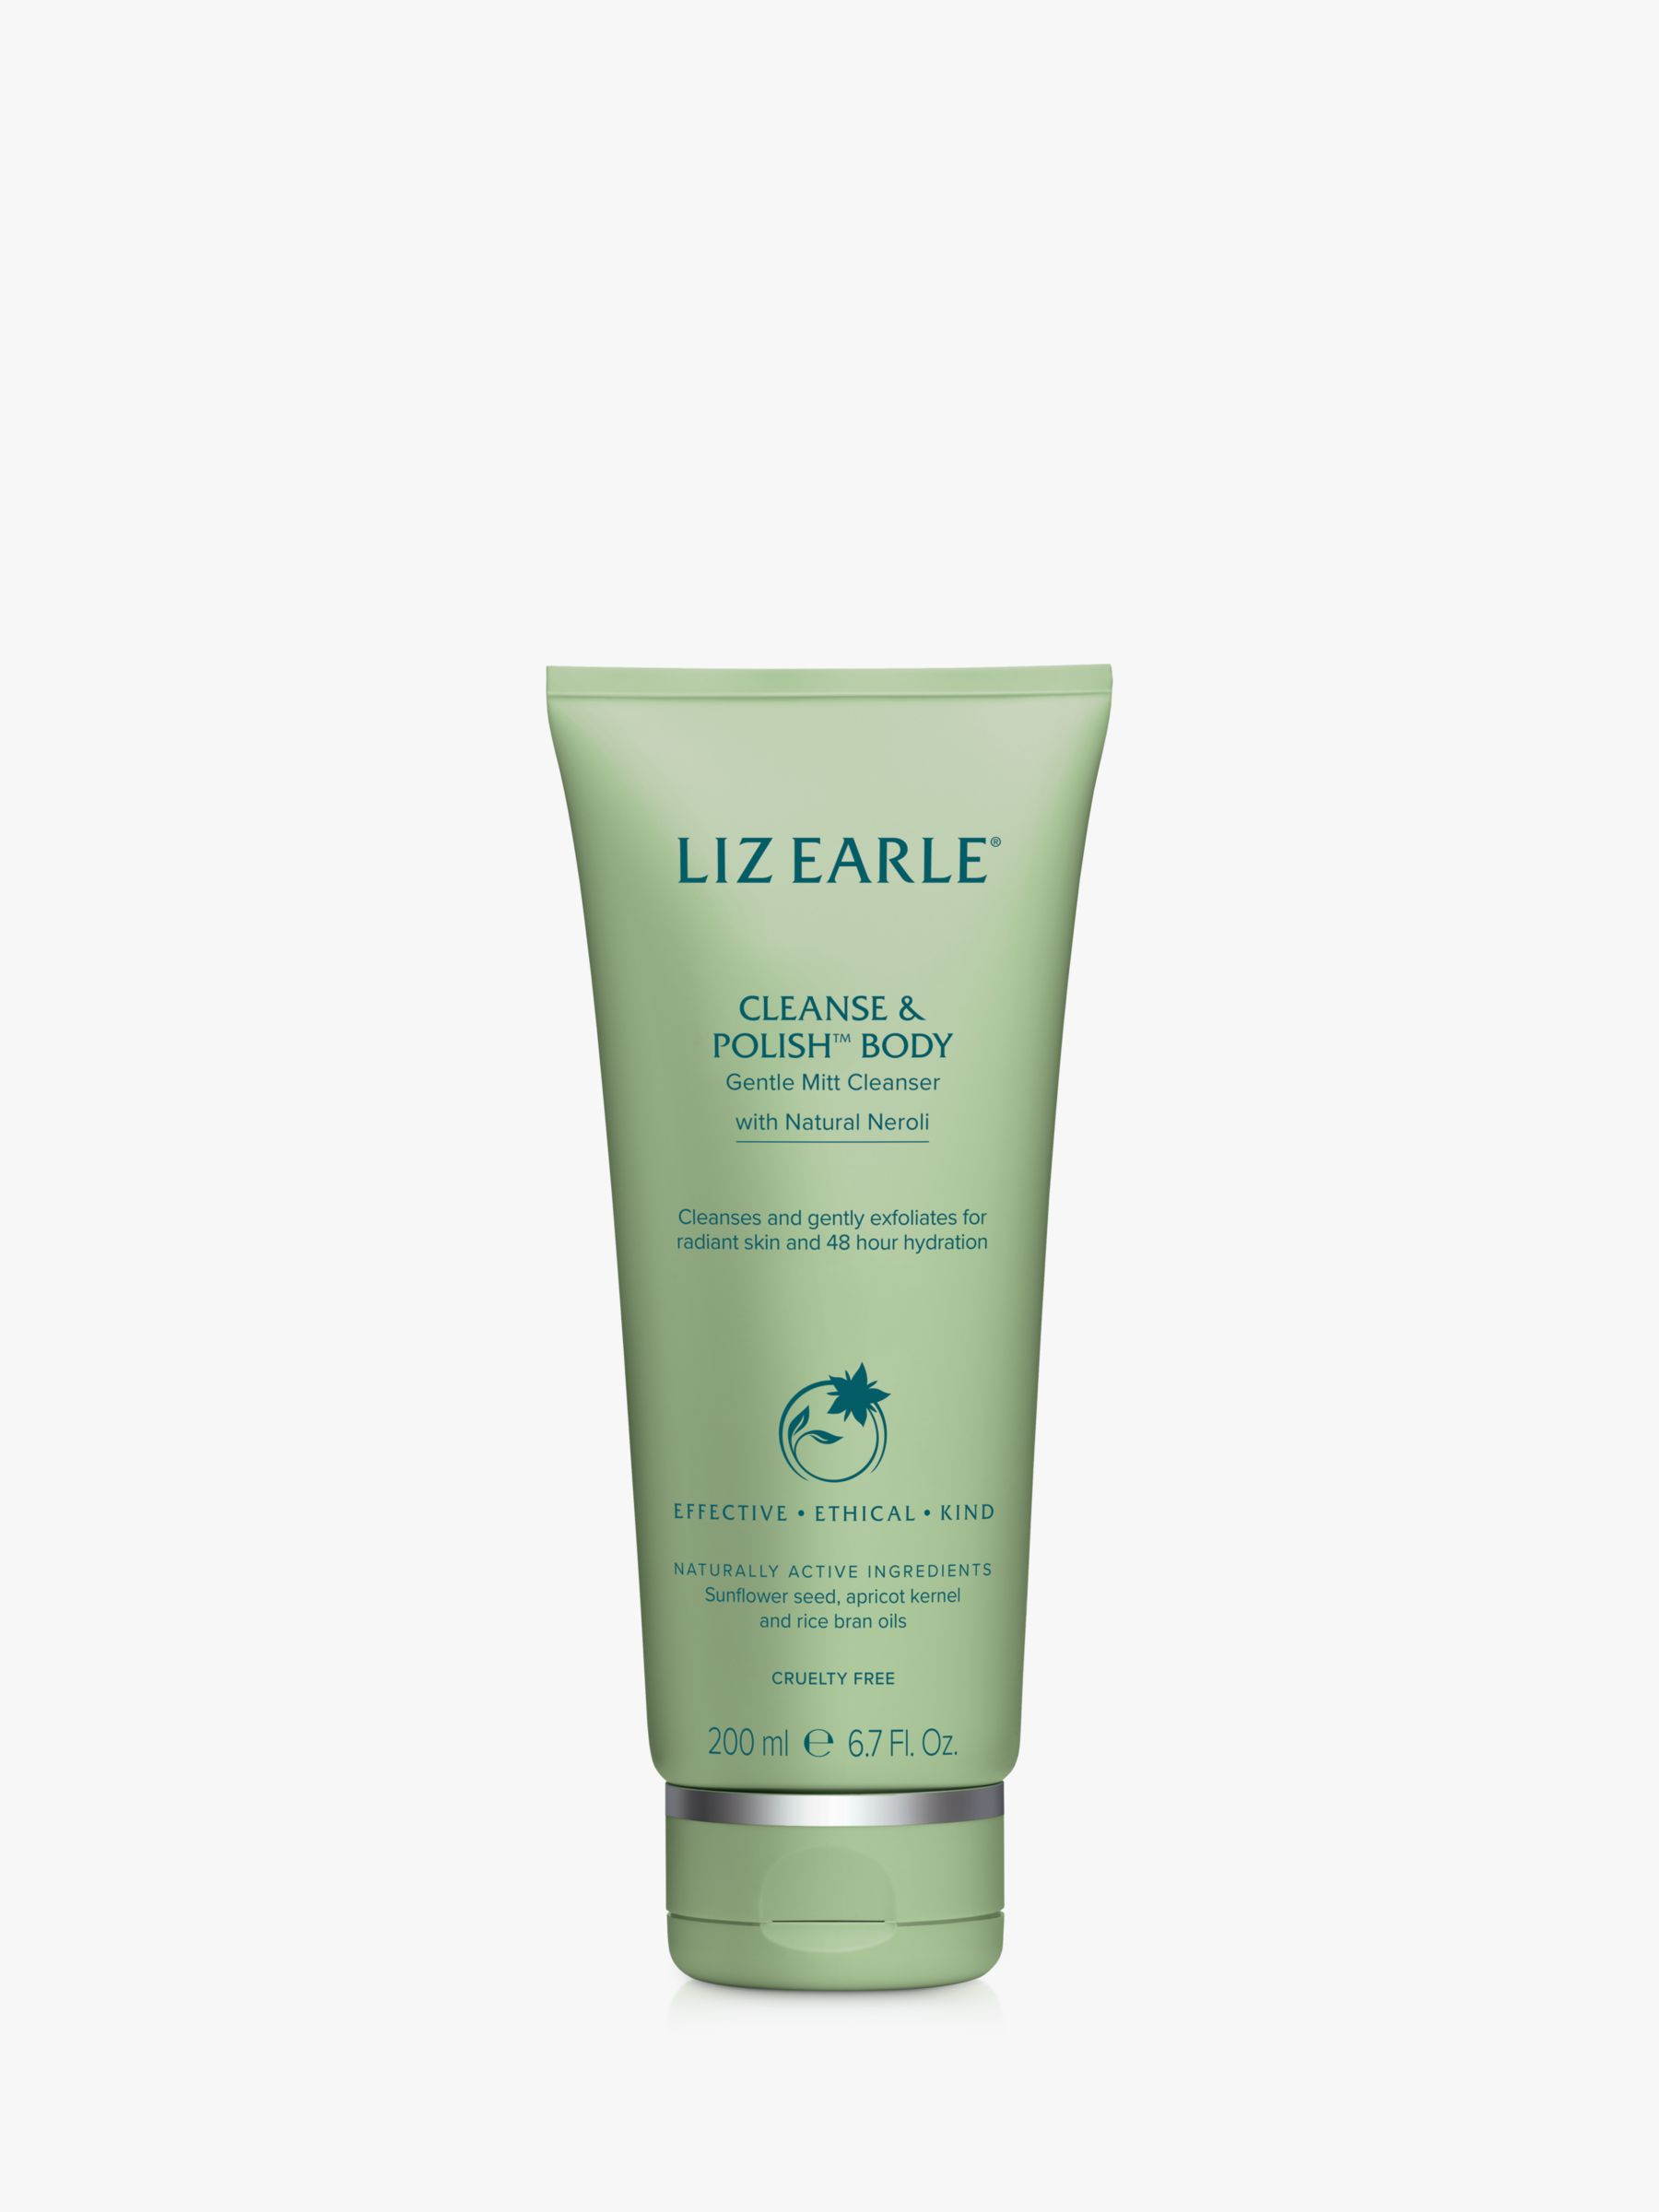 Liz Earle Cleanse And Polish™ Body Gentle Mitt Cleanser Neroli Edition 200ml At John Lewis